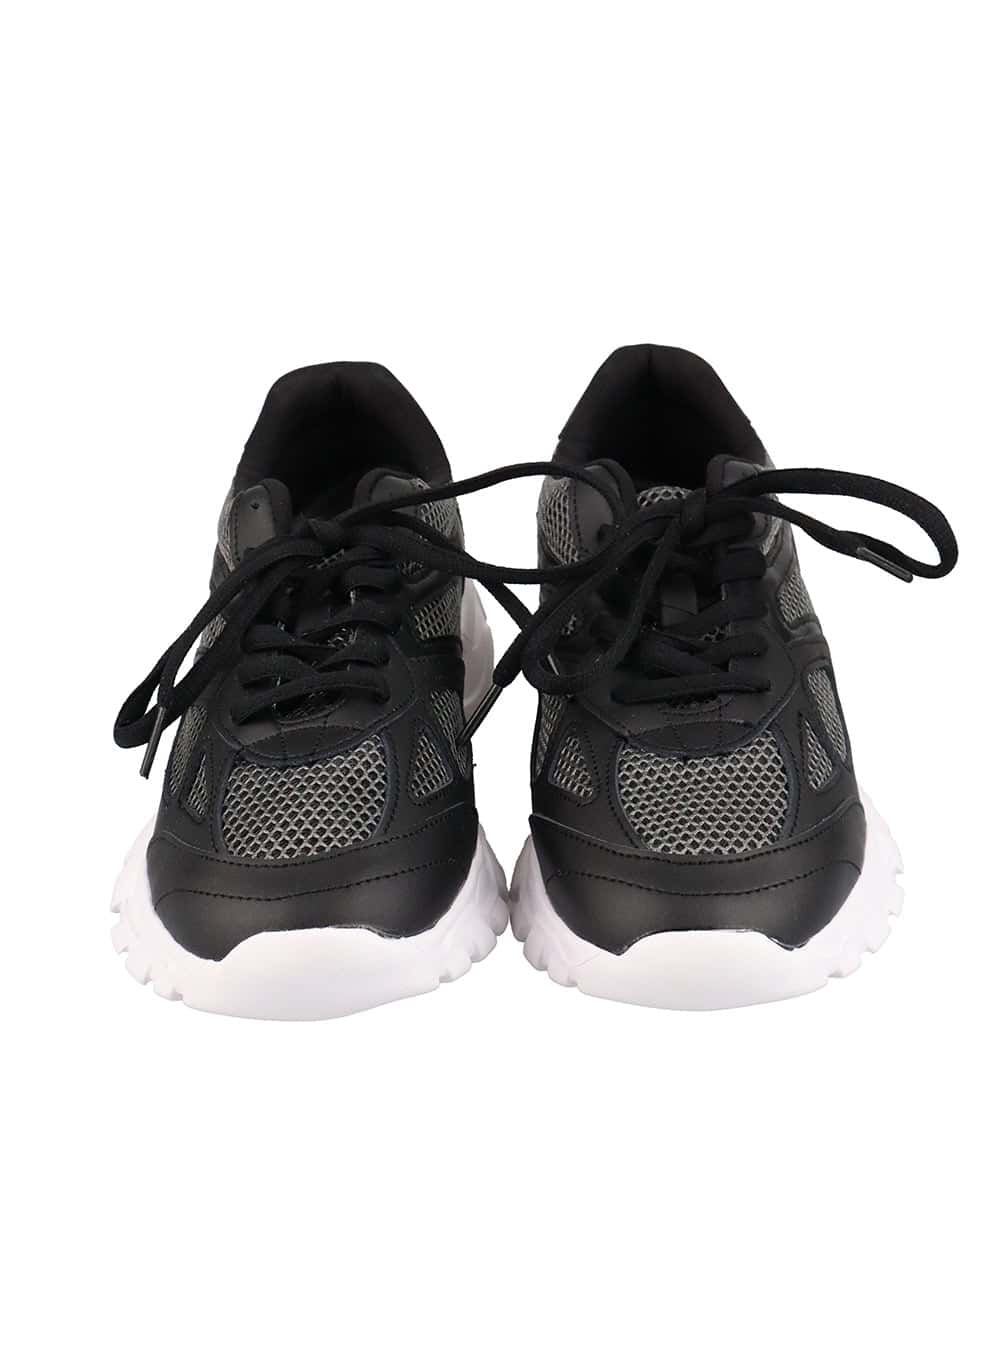 mens-mesh-running-shoes-iy410 / Black